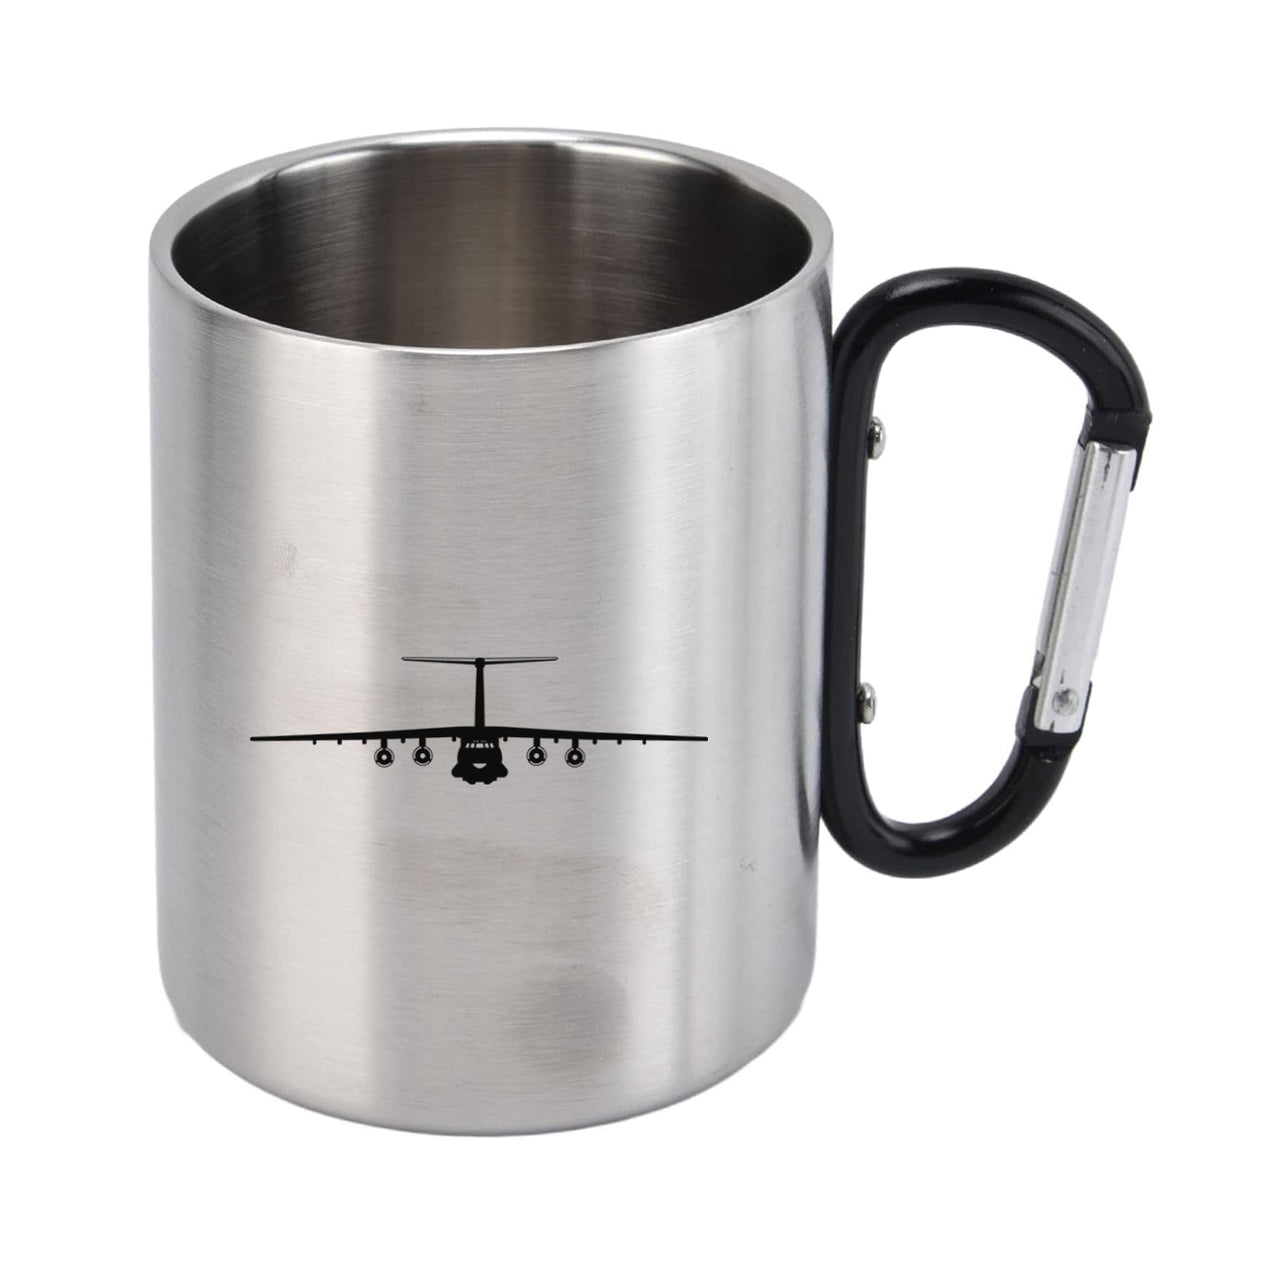 Ilyushin IL-76 Silhouette Designed Stainless Steel Outdoors Mugs